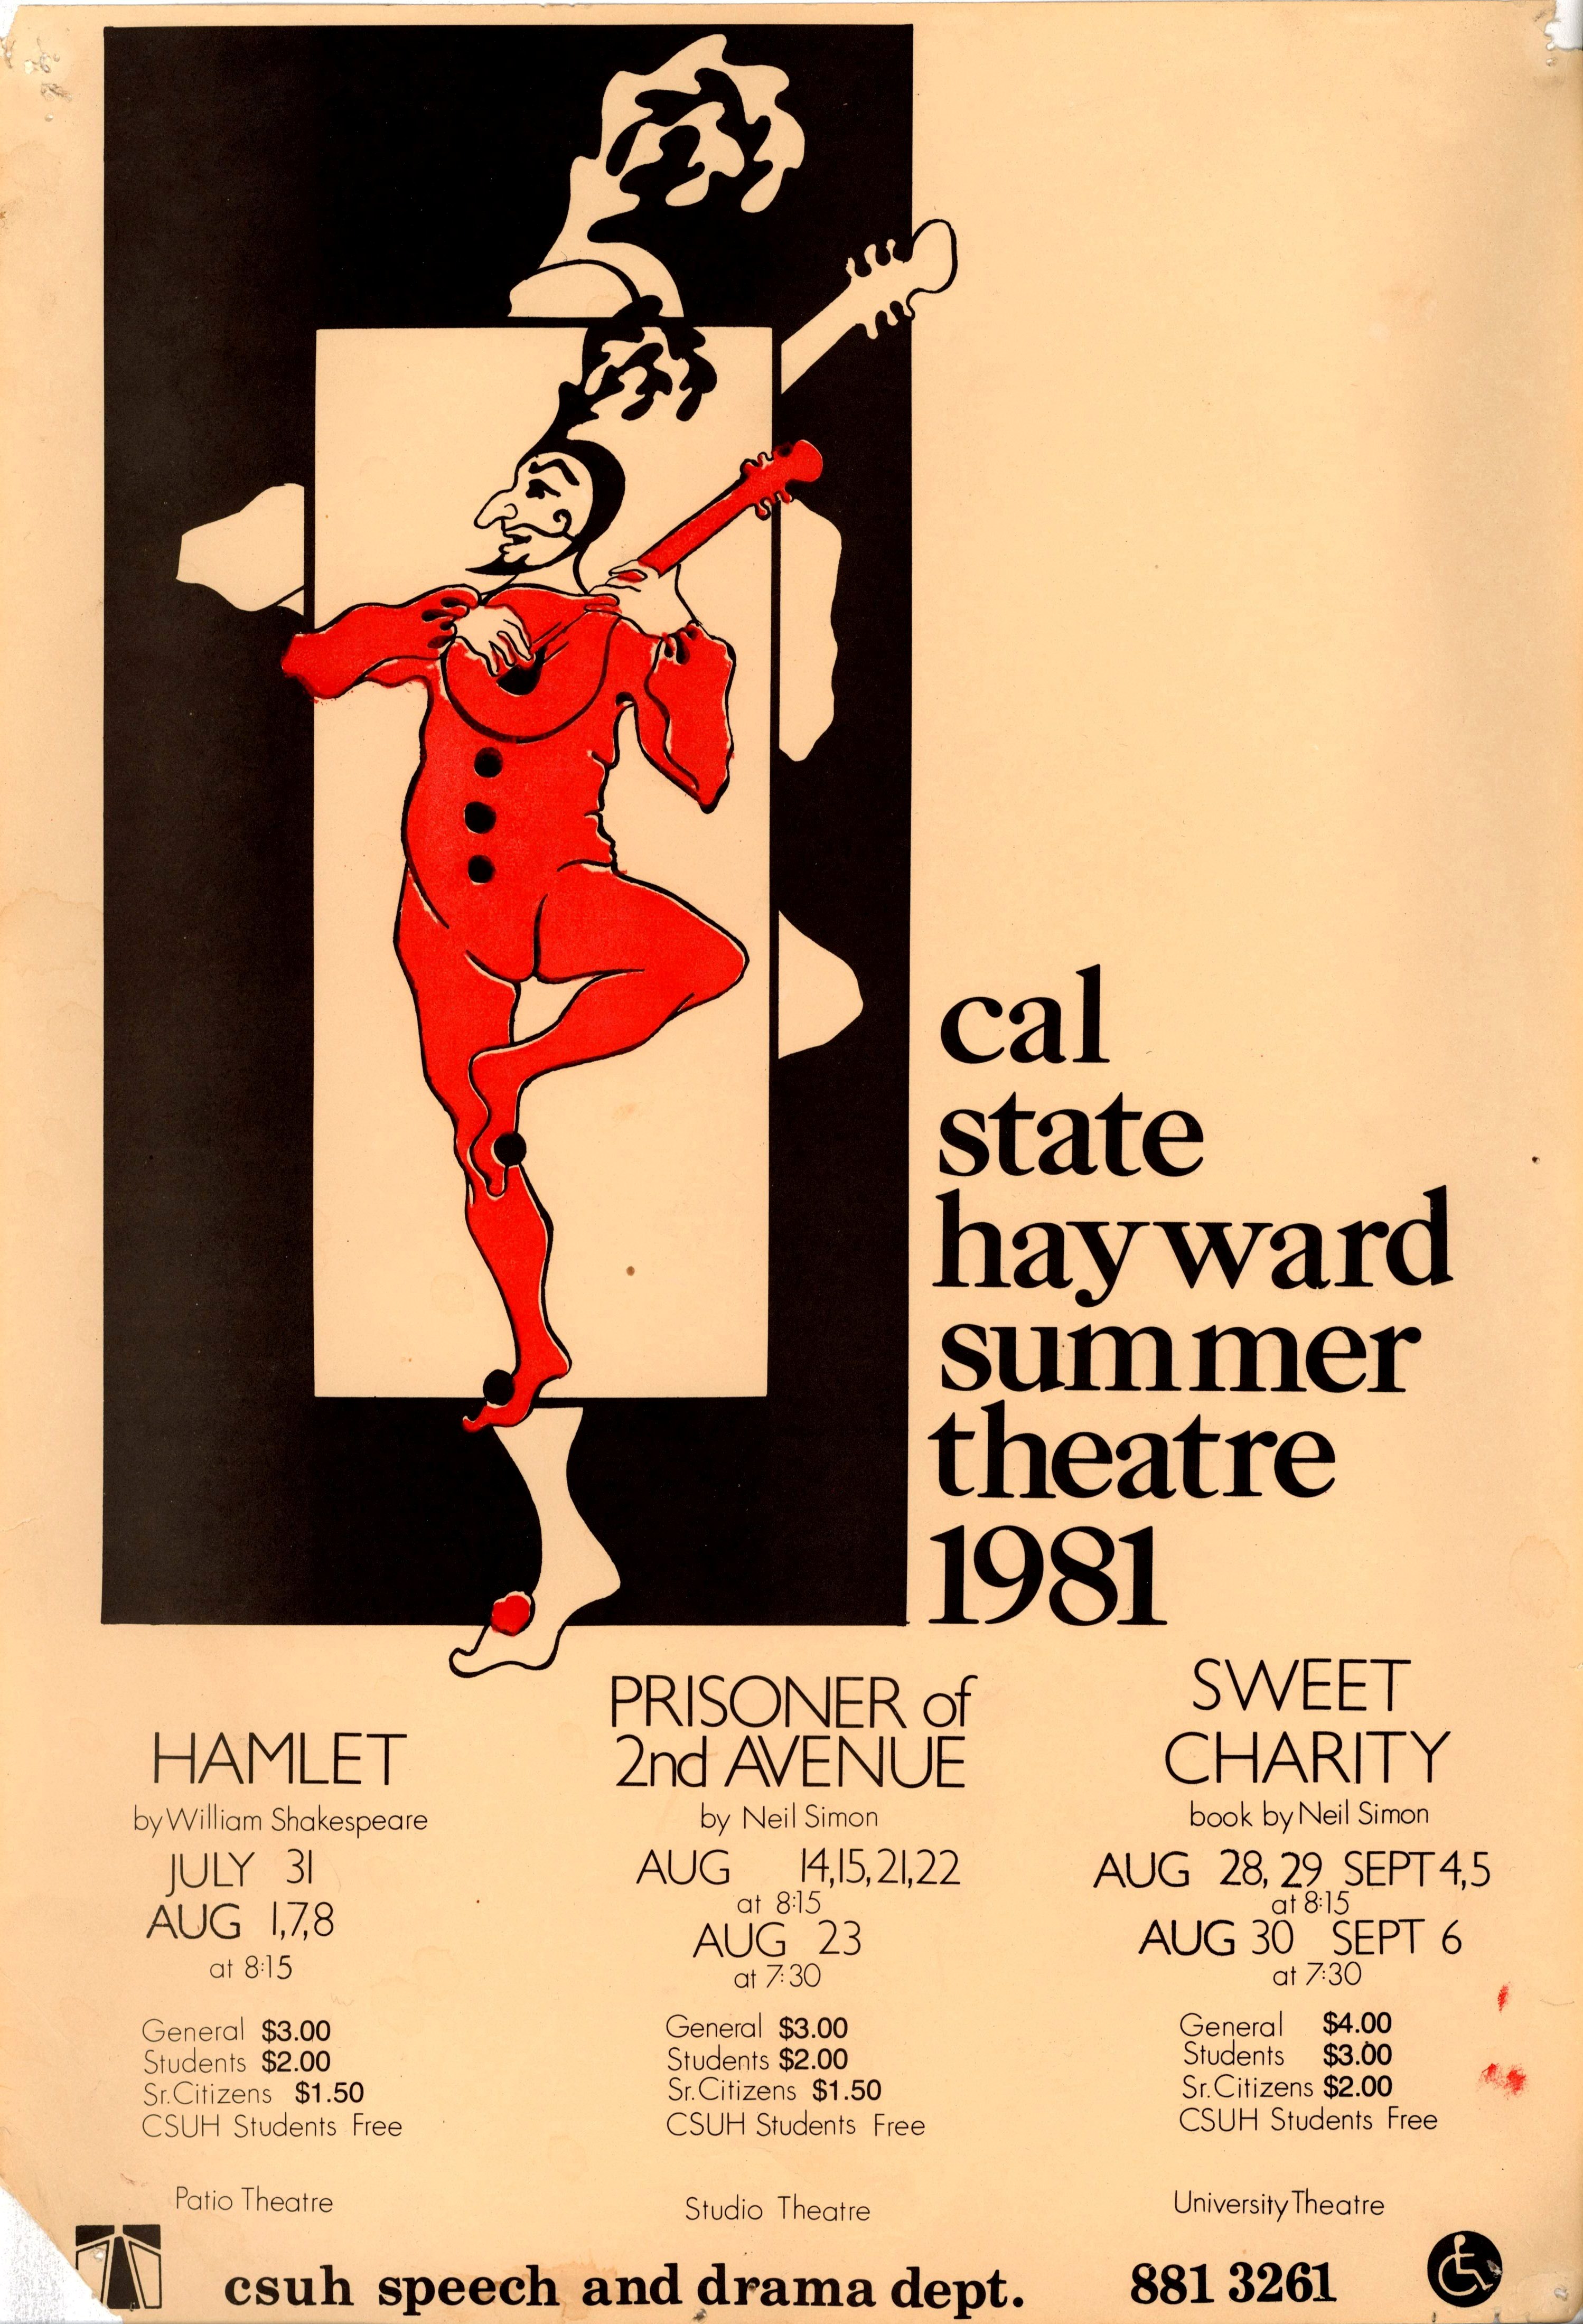 Summer Repertory Theatre 1981: Hamlet